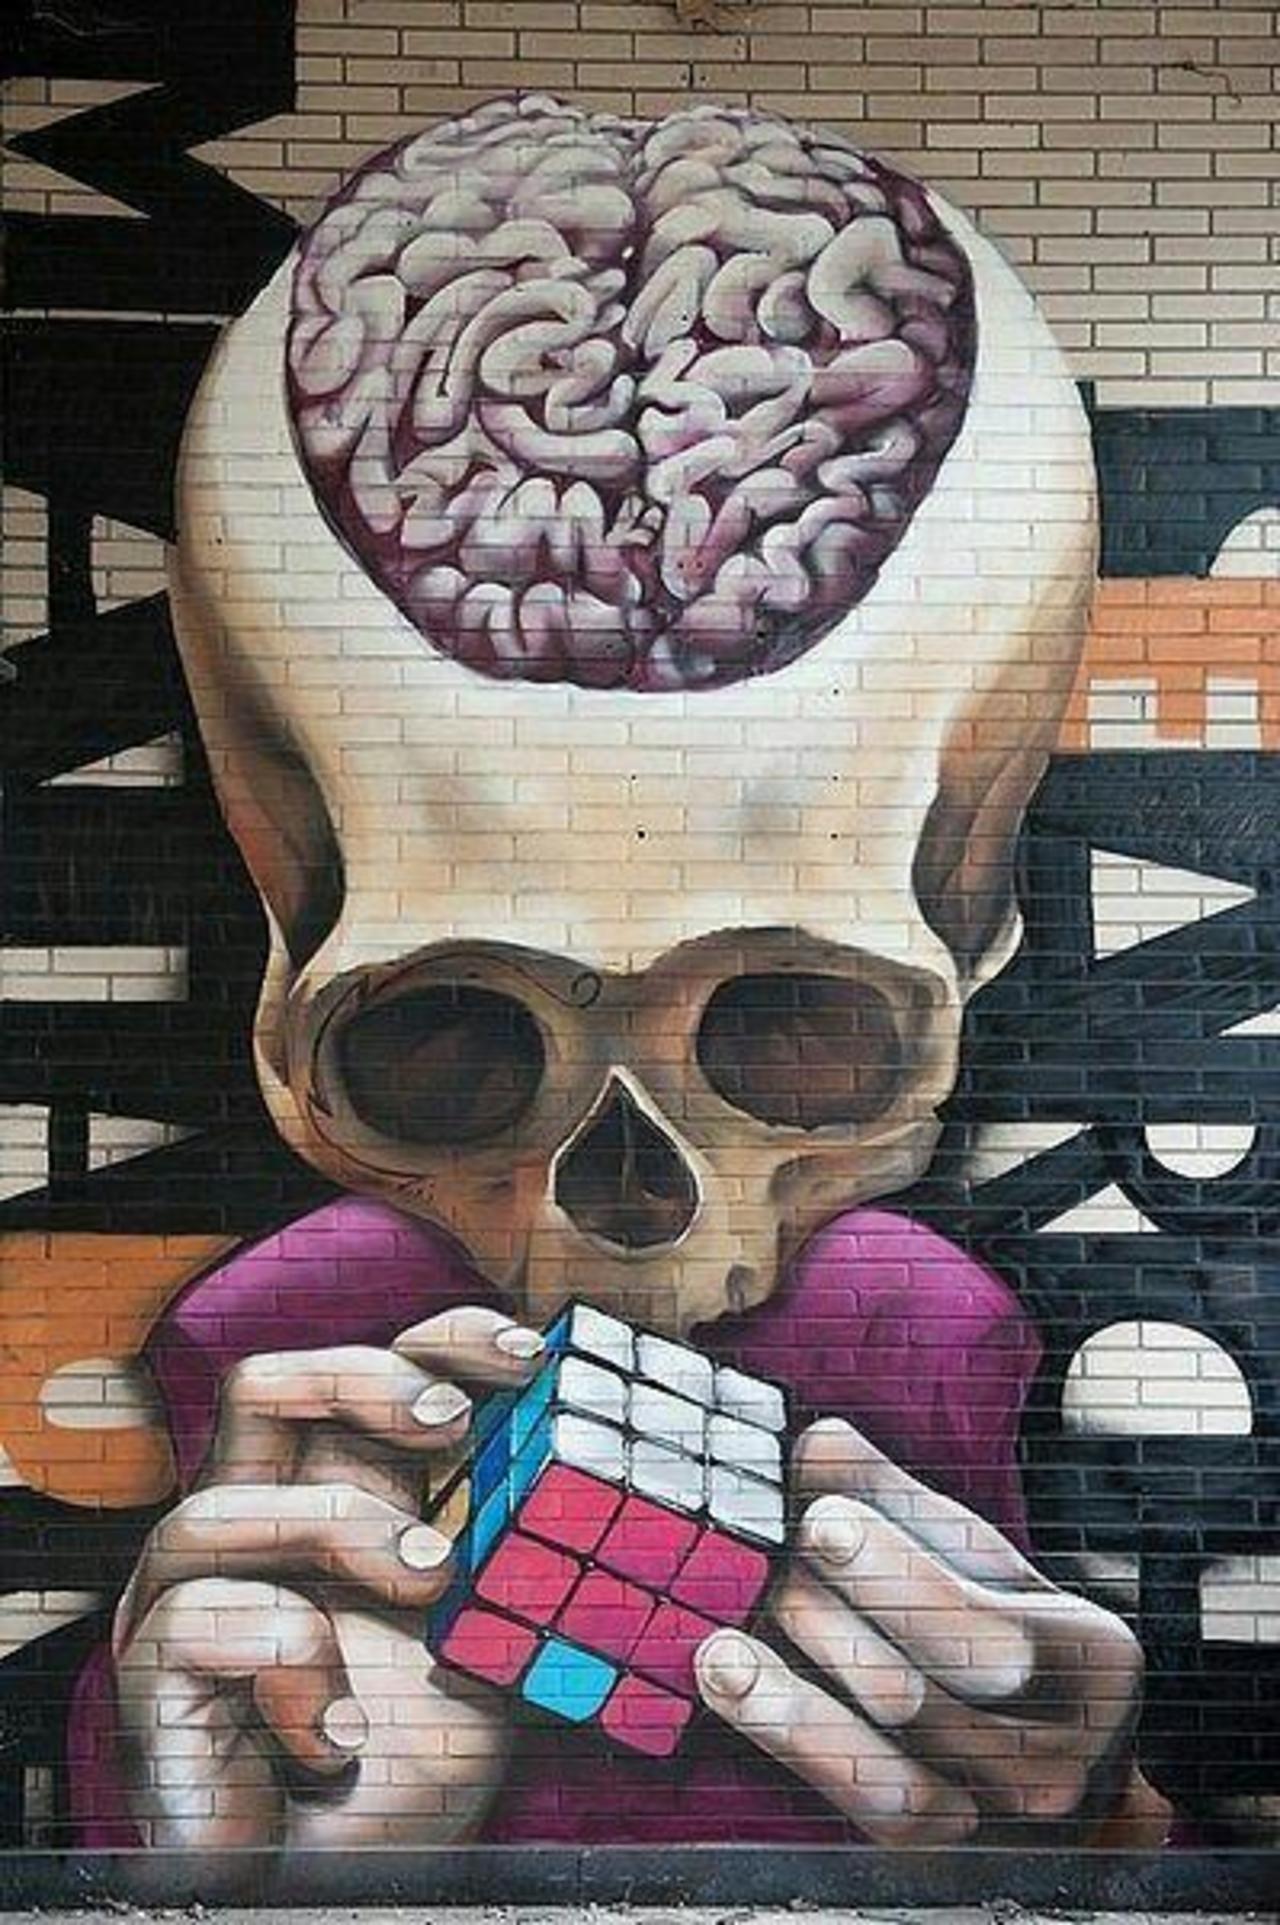 RT @hypatia373: #art #streetart #graffiti http://t.co/CW3P75P4qW